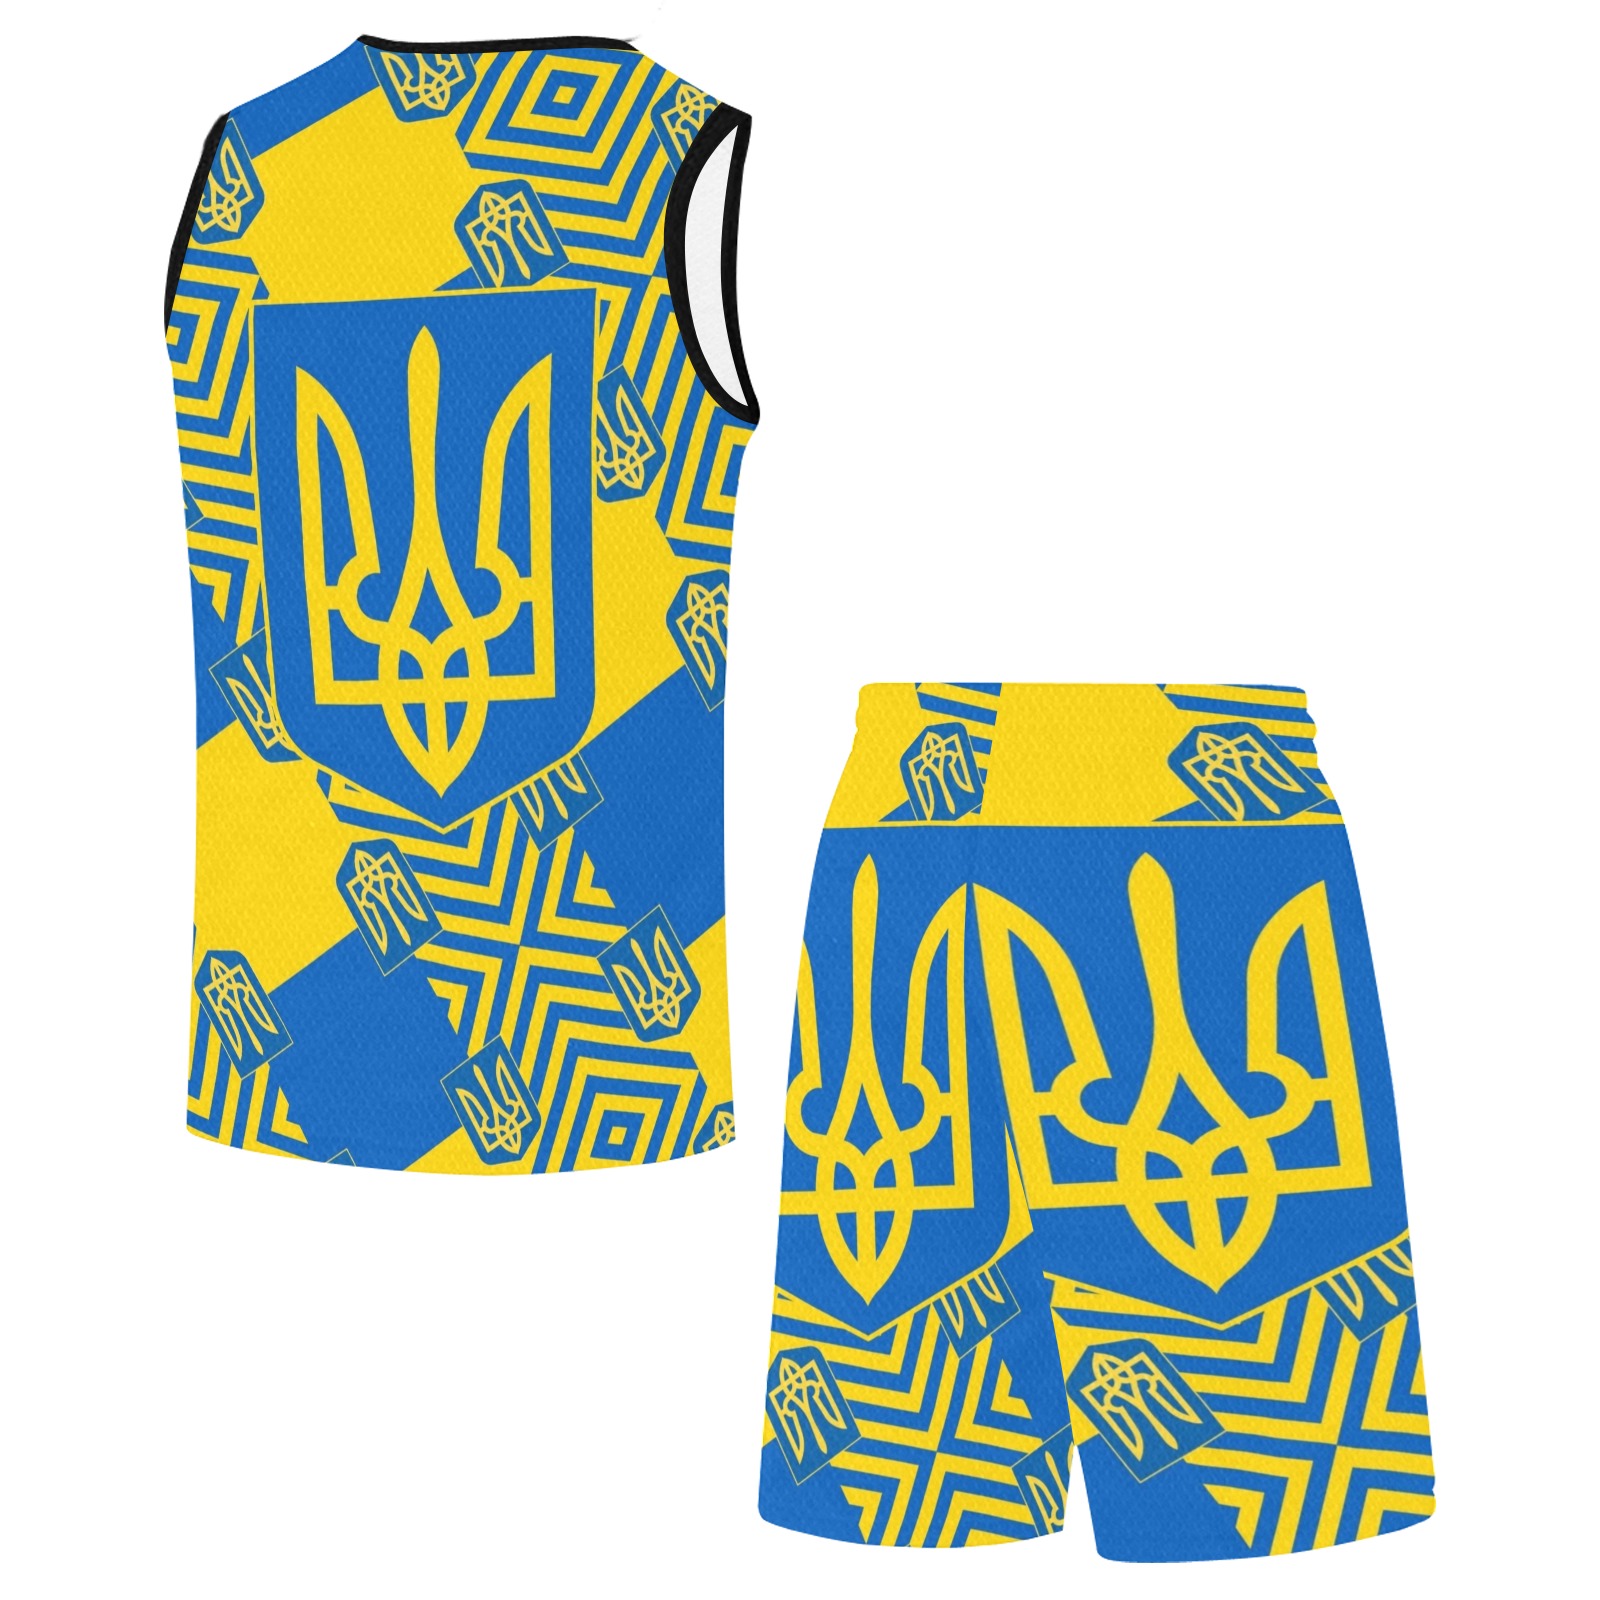 UKRAINE 2 All Over Print Basketball Uniform